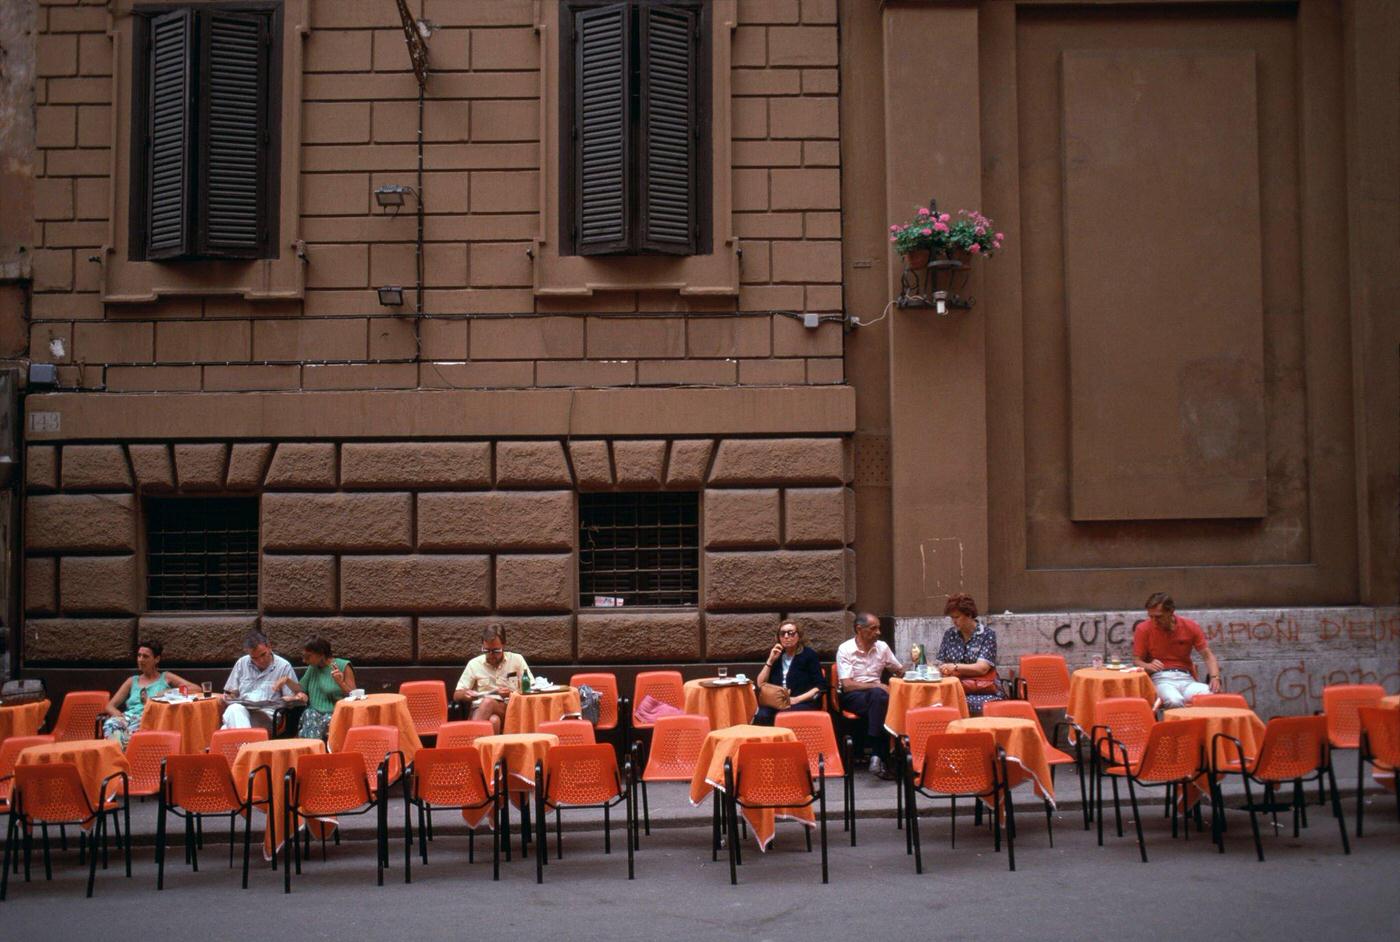 Cafe Terrace in Rome, 1985